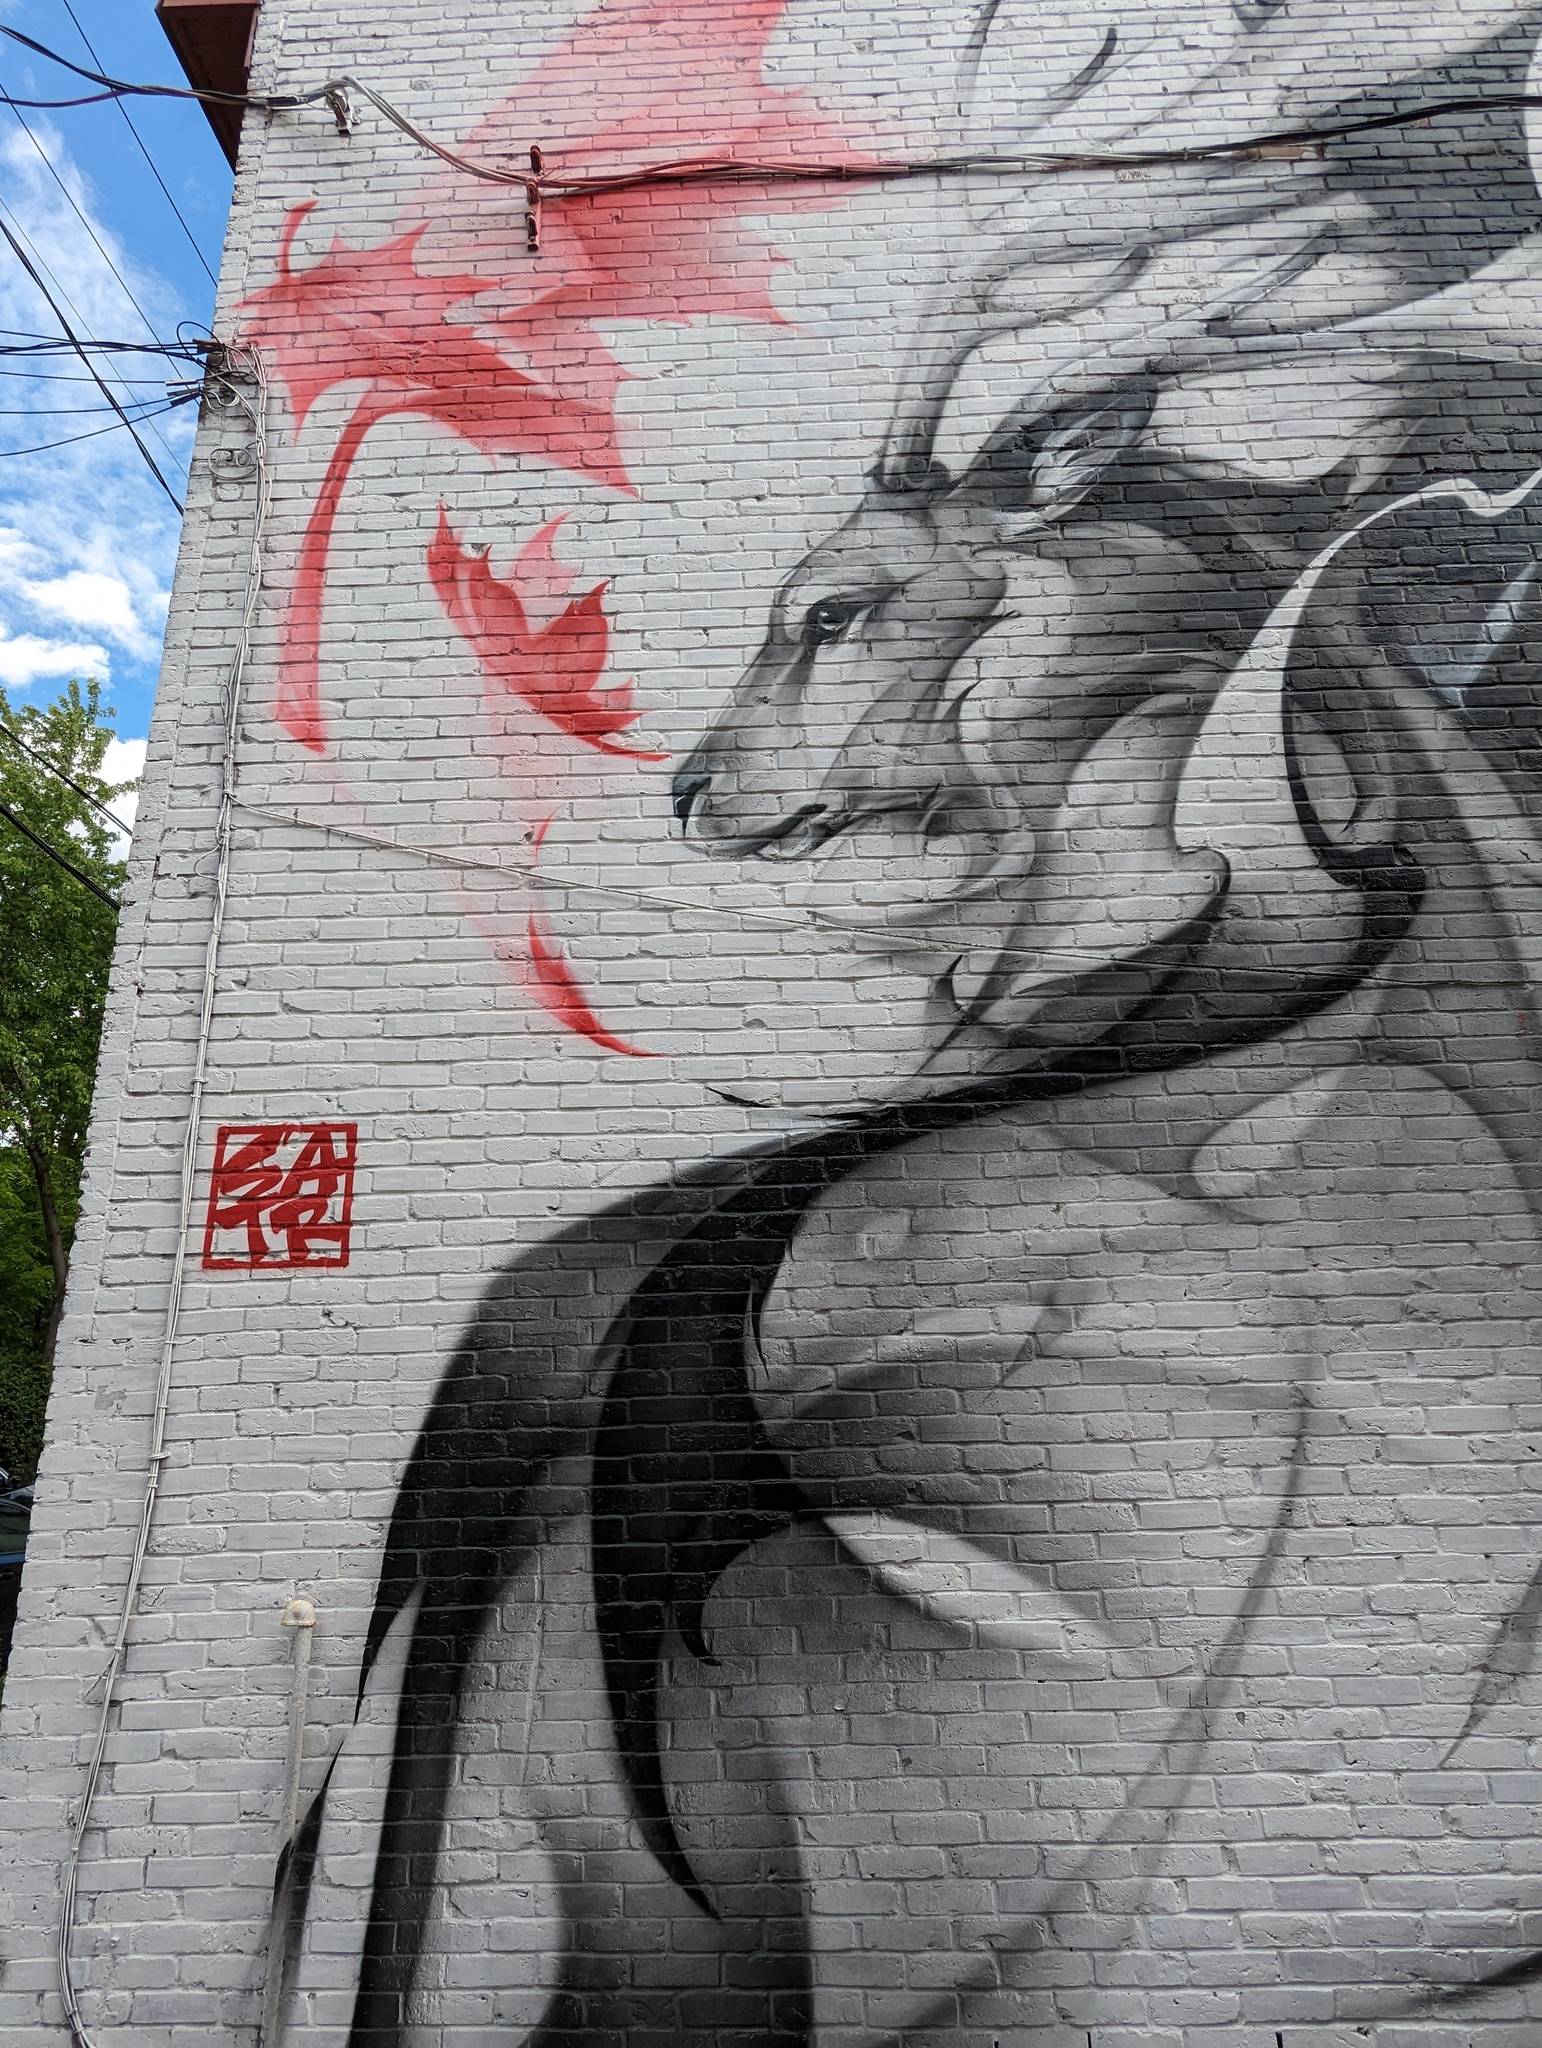 Satr, Street Art In Action&mdash;Canada